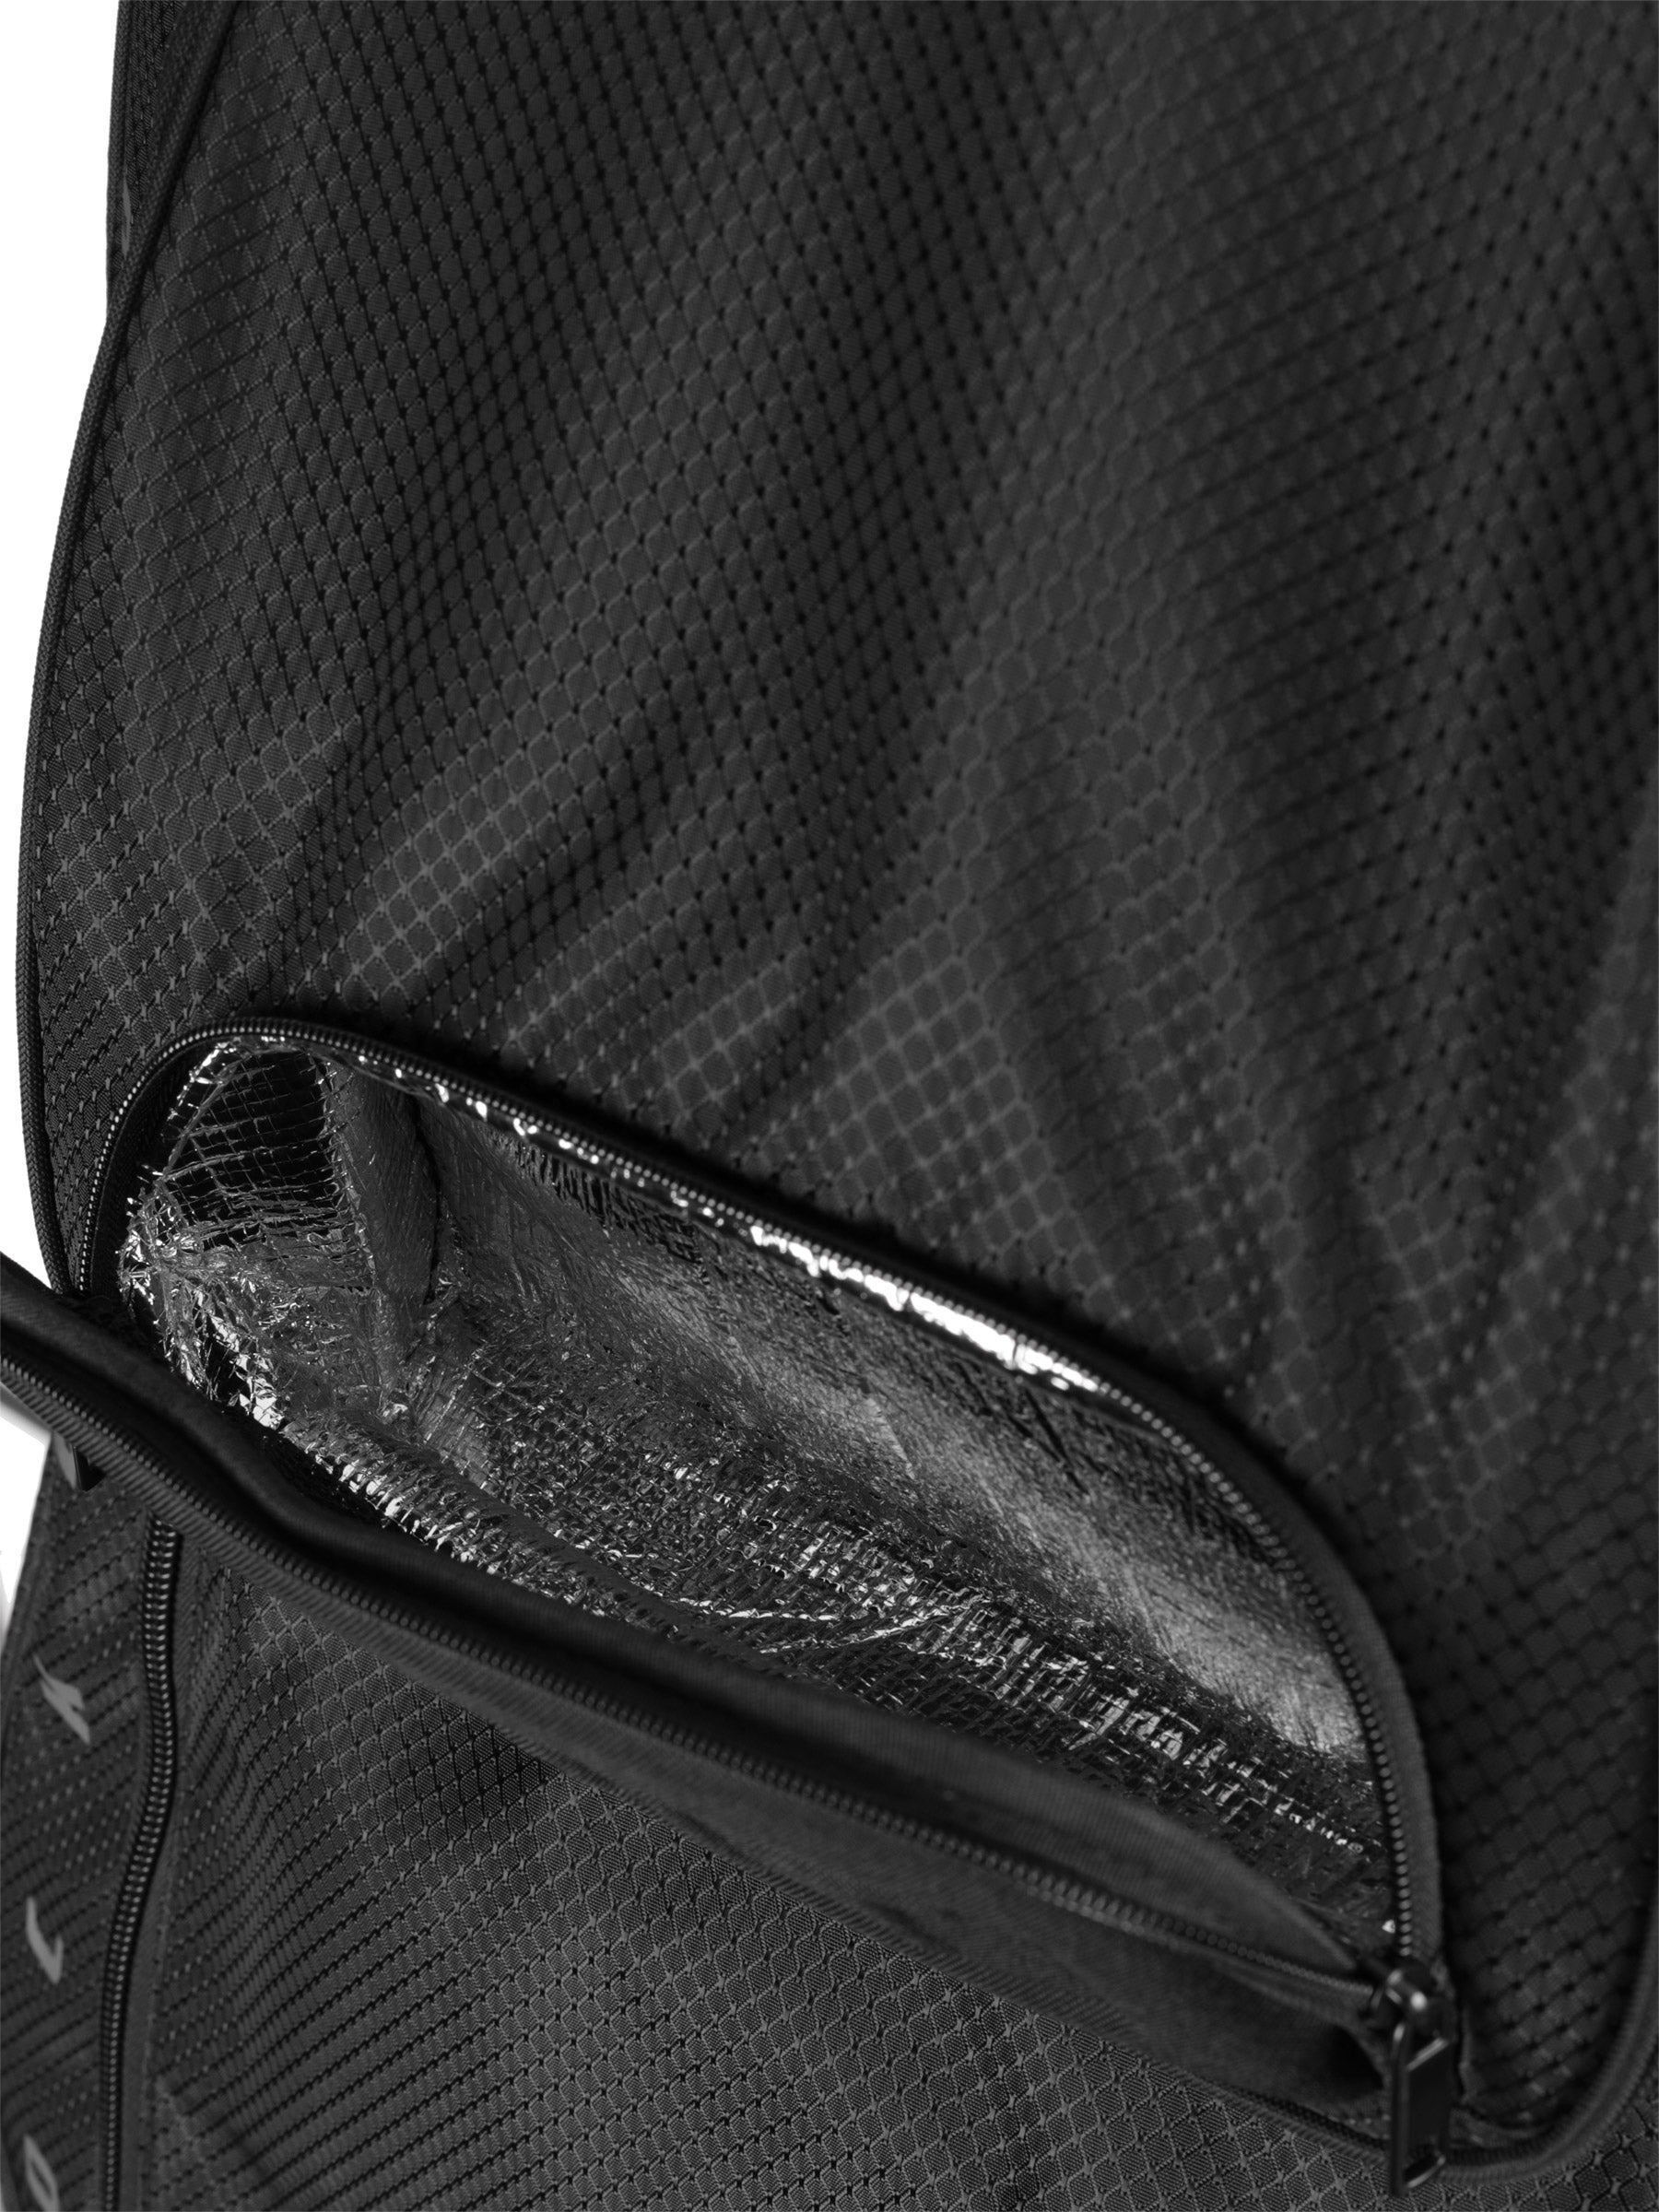 GRIT FLEX Hockey Tower 36 inch Wheeled Equipment Bag Black 